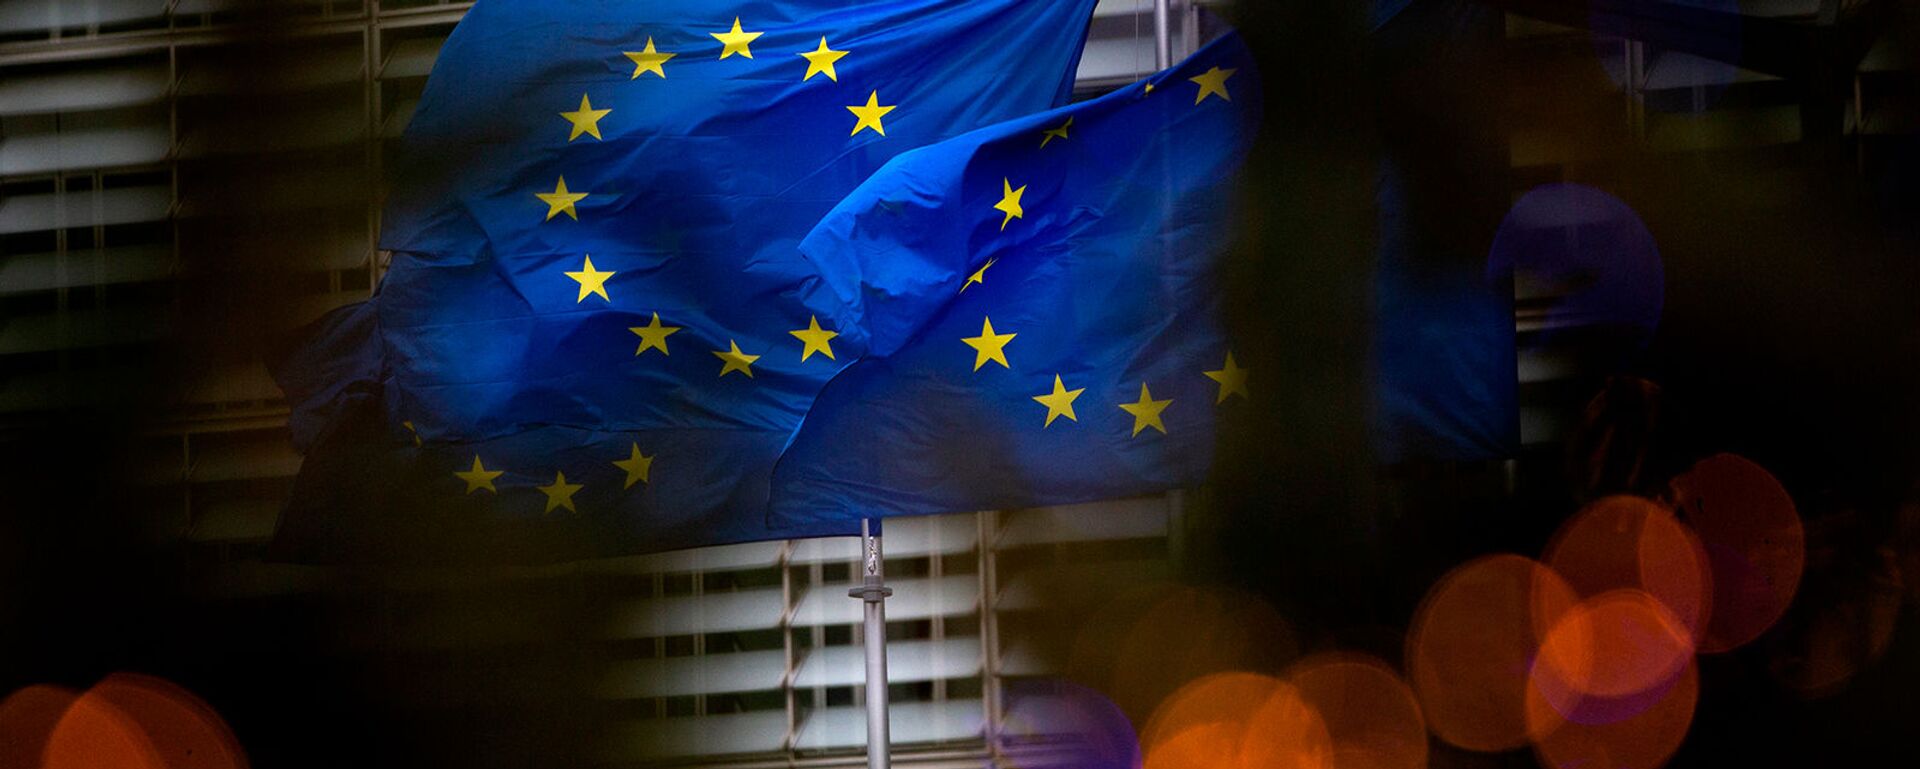 Флаги Европейского союза перед штаб-квартирой ЕС в Брюсселе - Sputnik Արմենիա, 1920, 10.02.2021